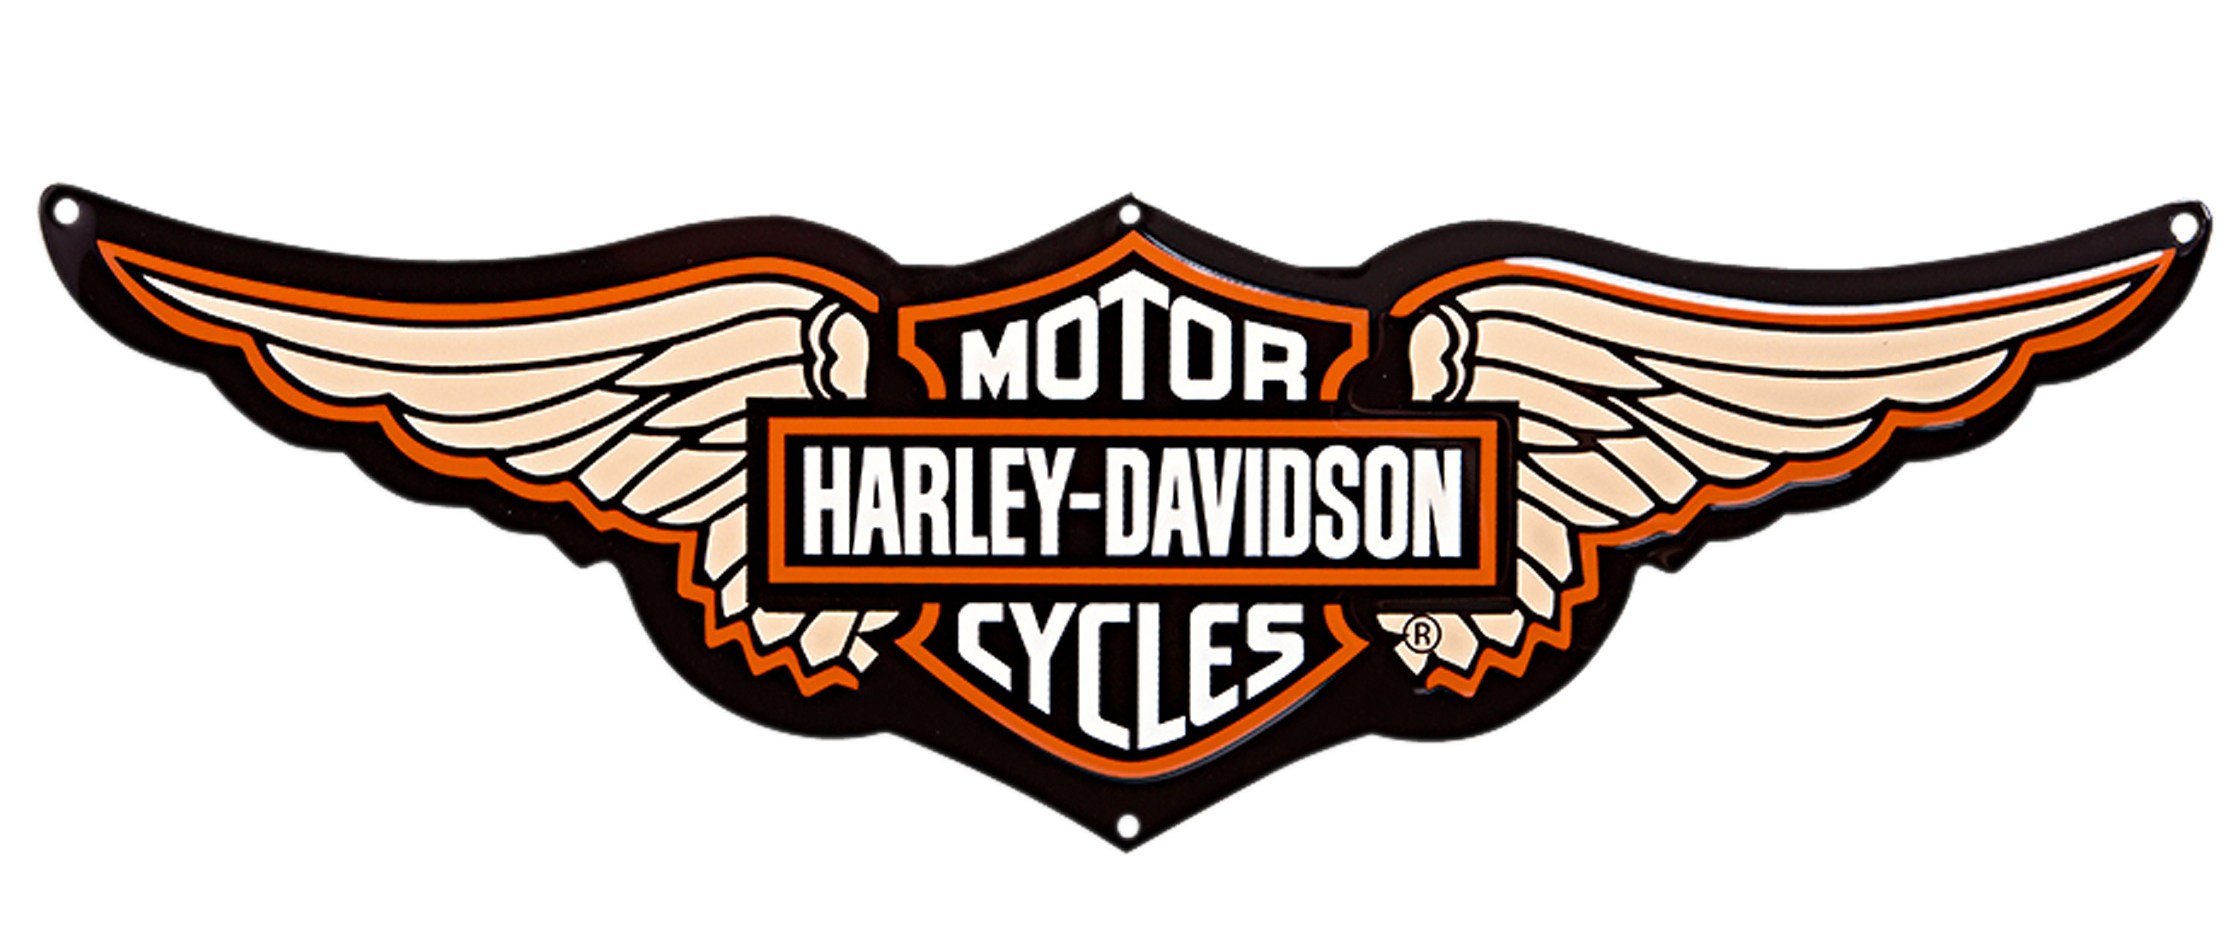 Harley Davidson Bikes Hd Wallpaper , Images All Motorcycles - Harley Davidson Bikes Symbol , HD Wallpaper & Backgrounds